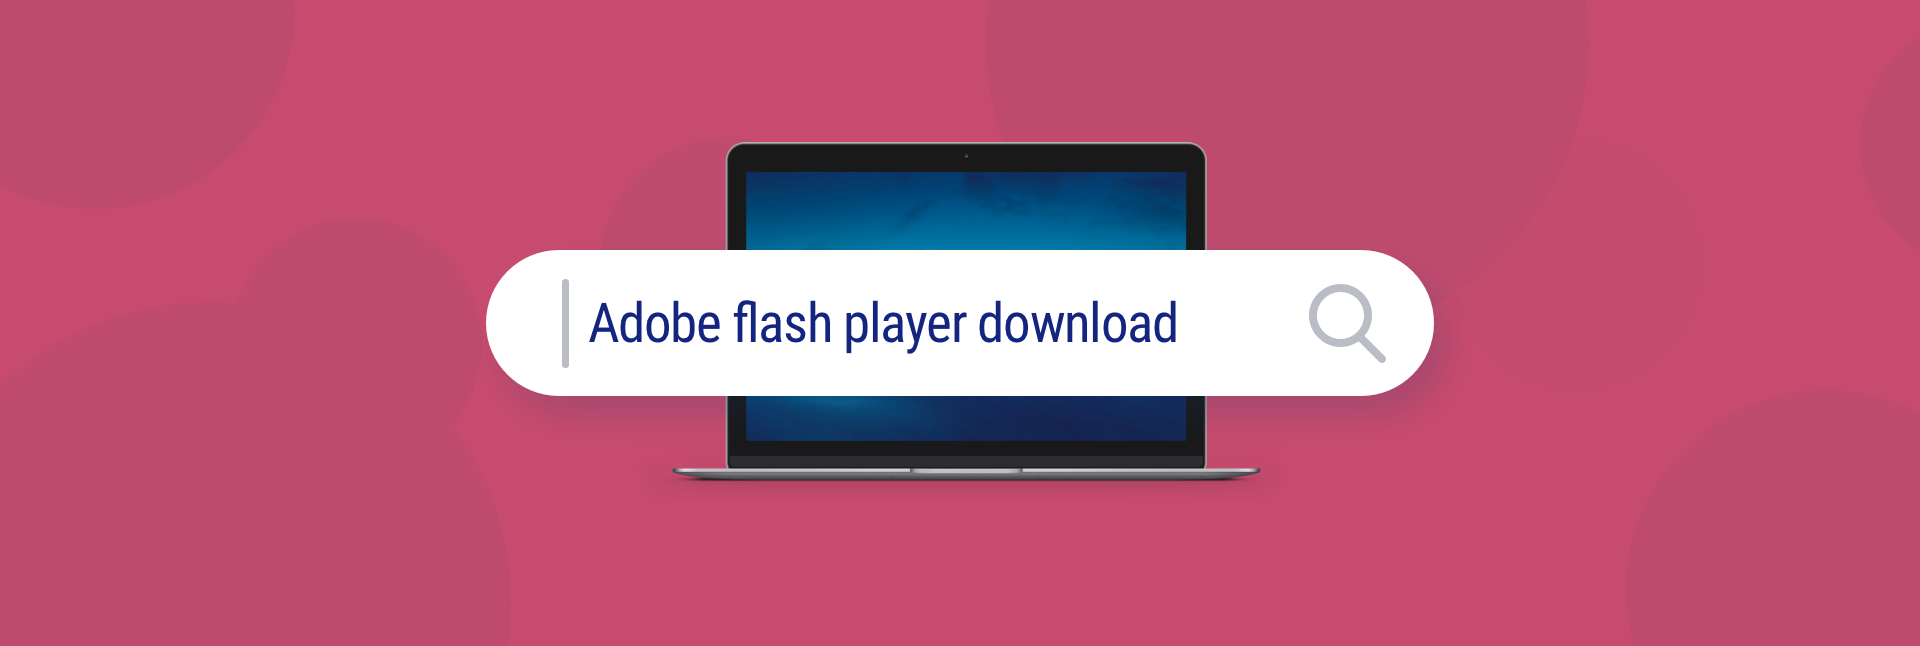 adobe flash player windows 7 64 bit google chrome download